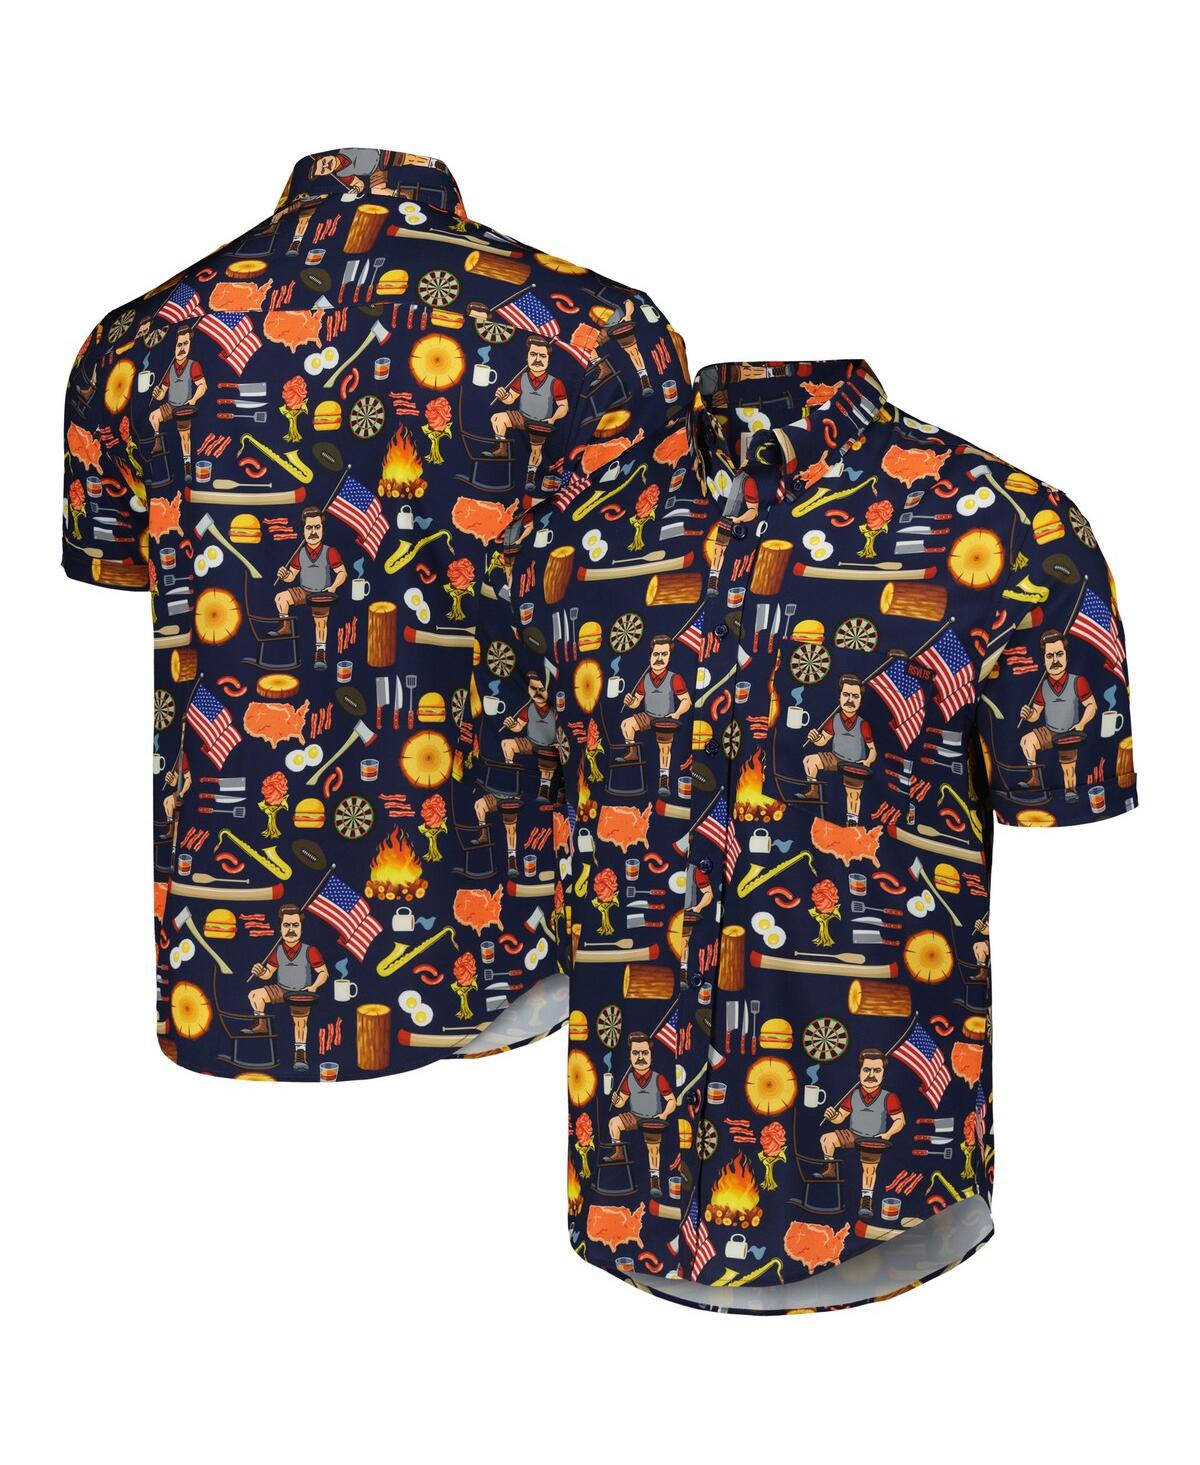 Men's and Women's Rsvlts Navy Parks and Recreation Ron Swanson's Shirt of Greatness Kunuflex Button-Down Shirt - Navy